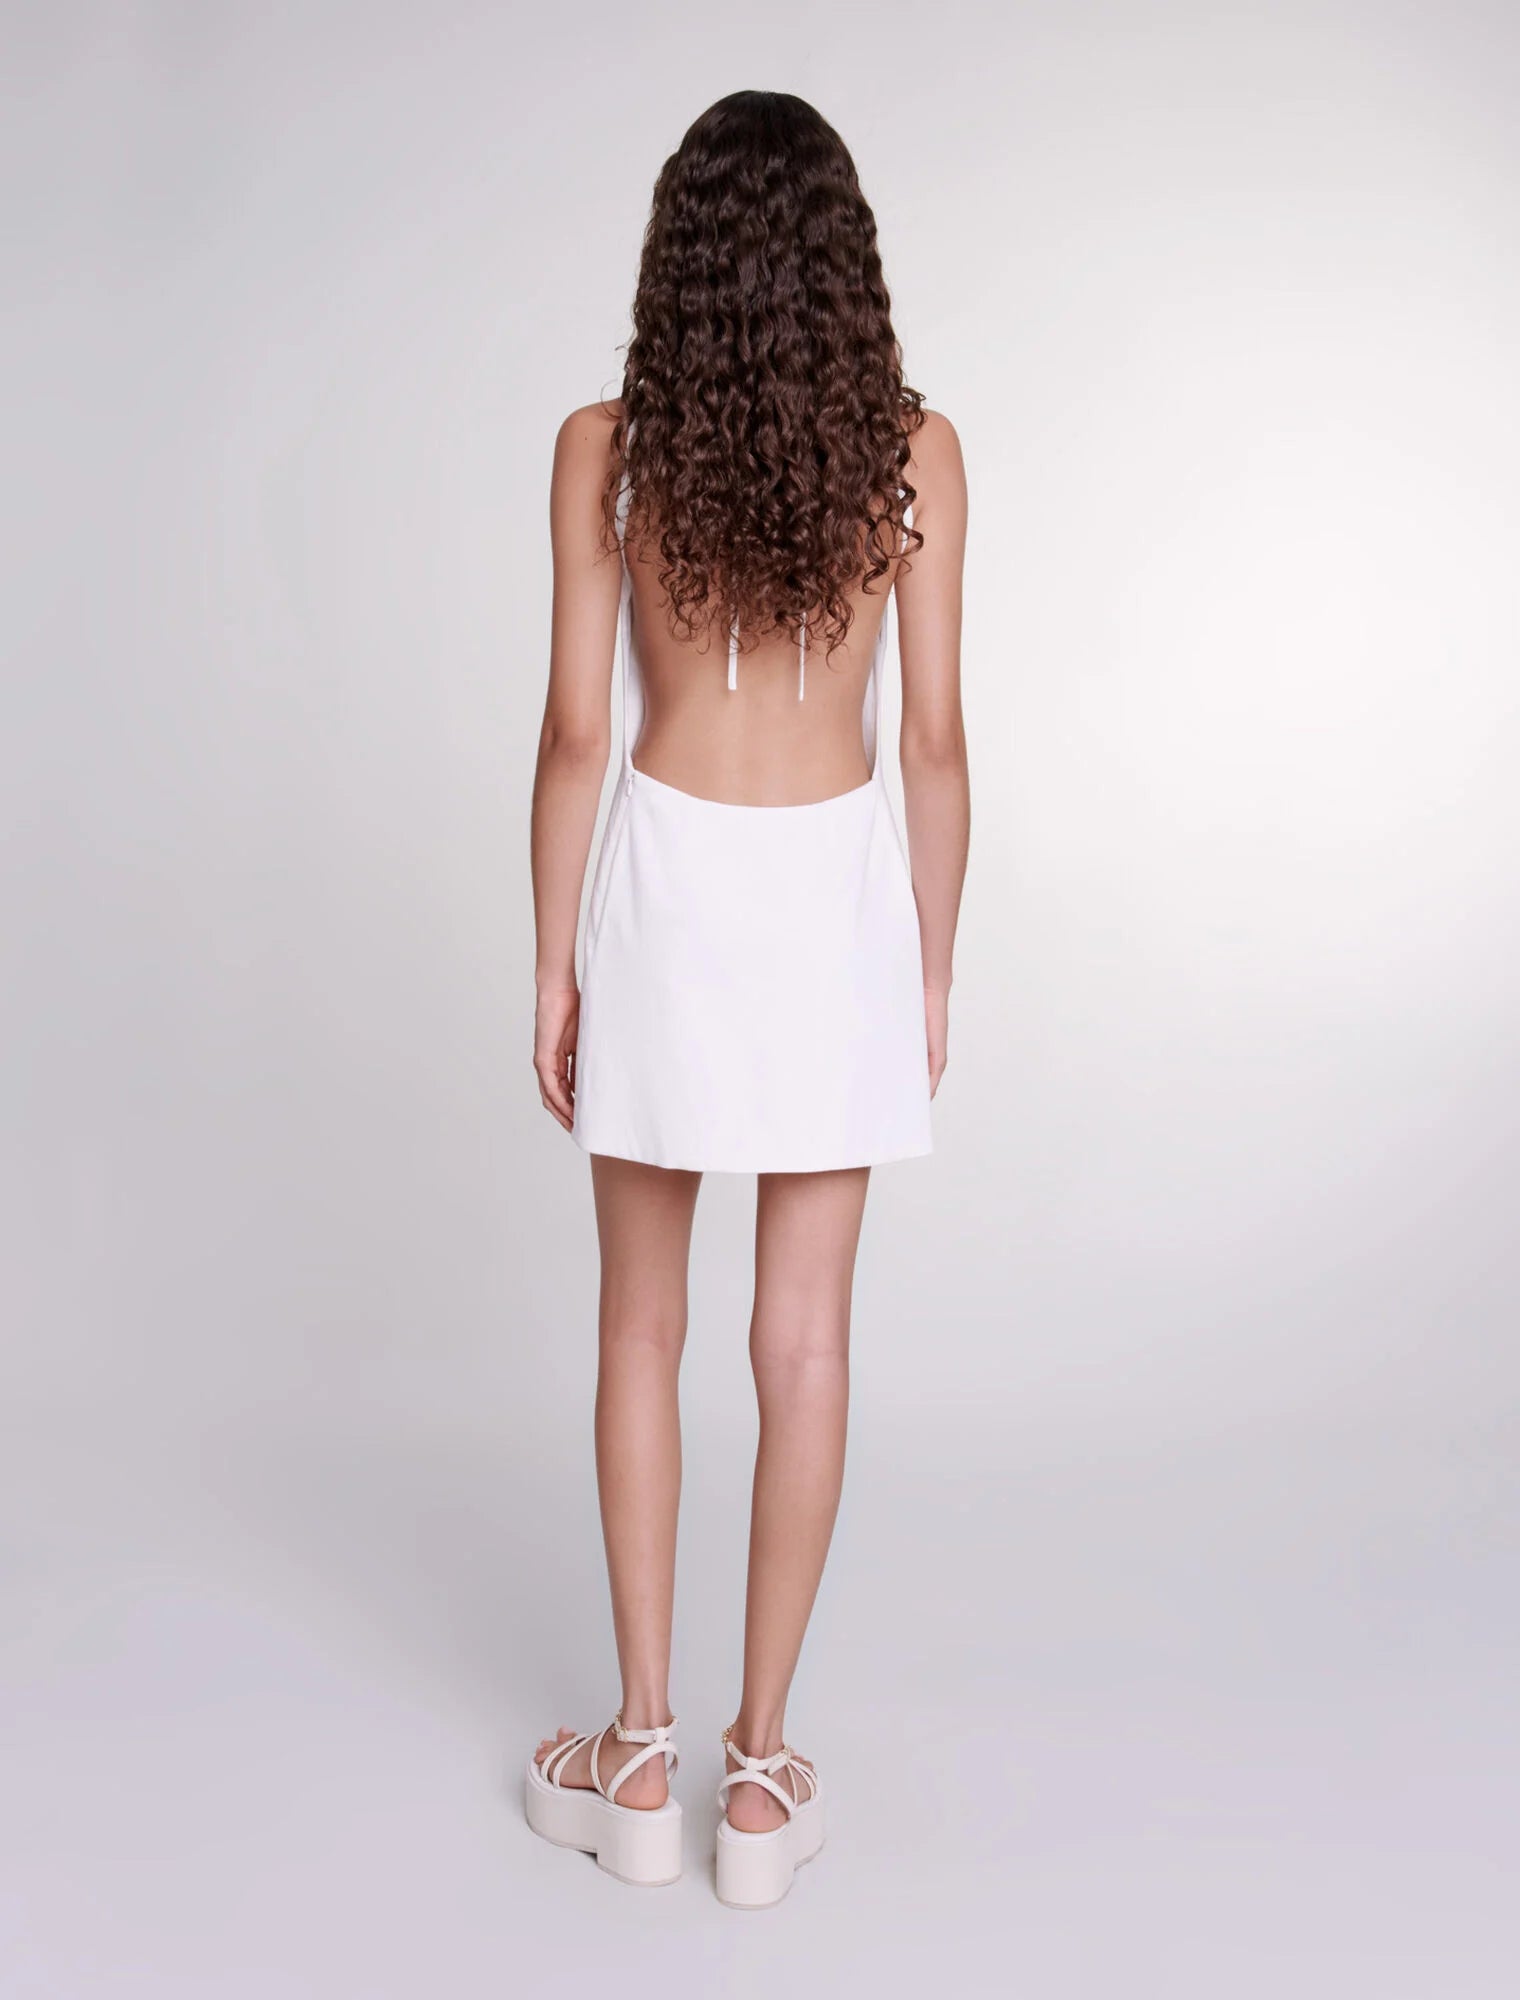 White Backless dress